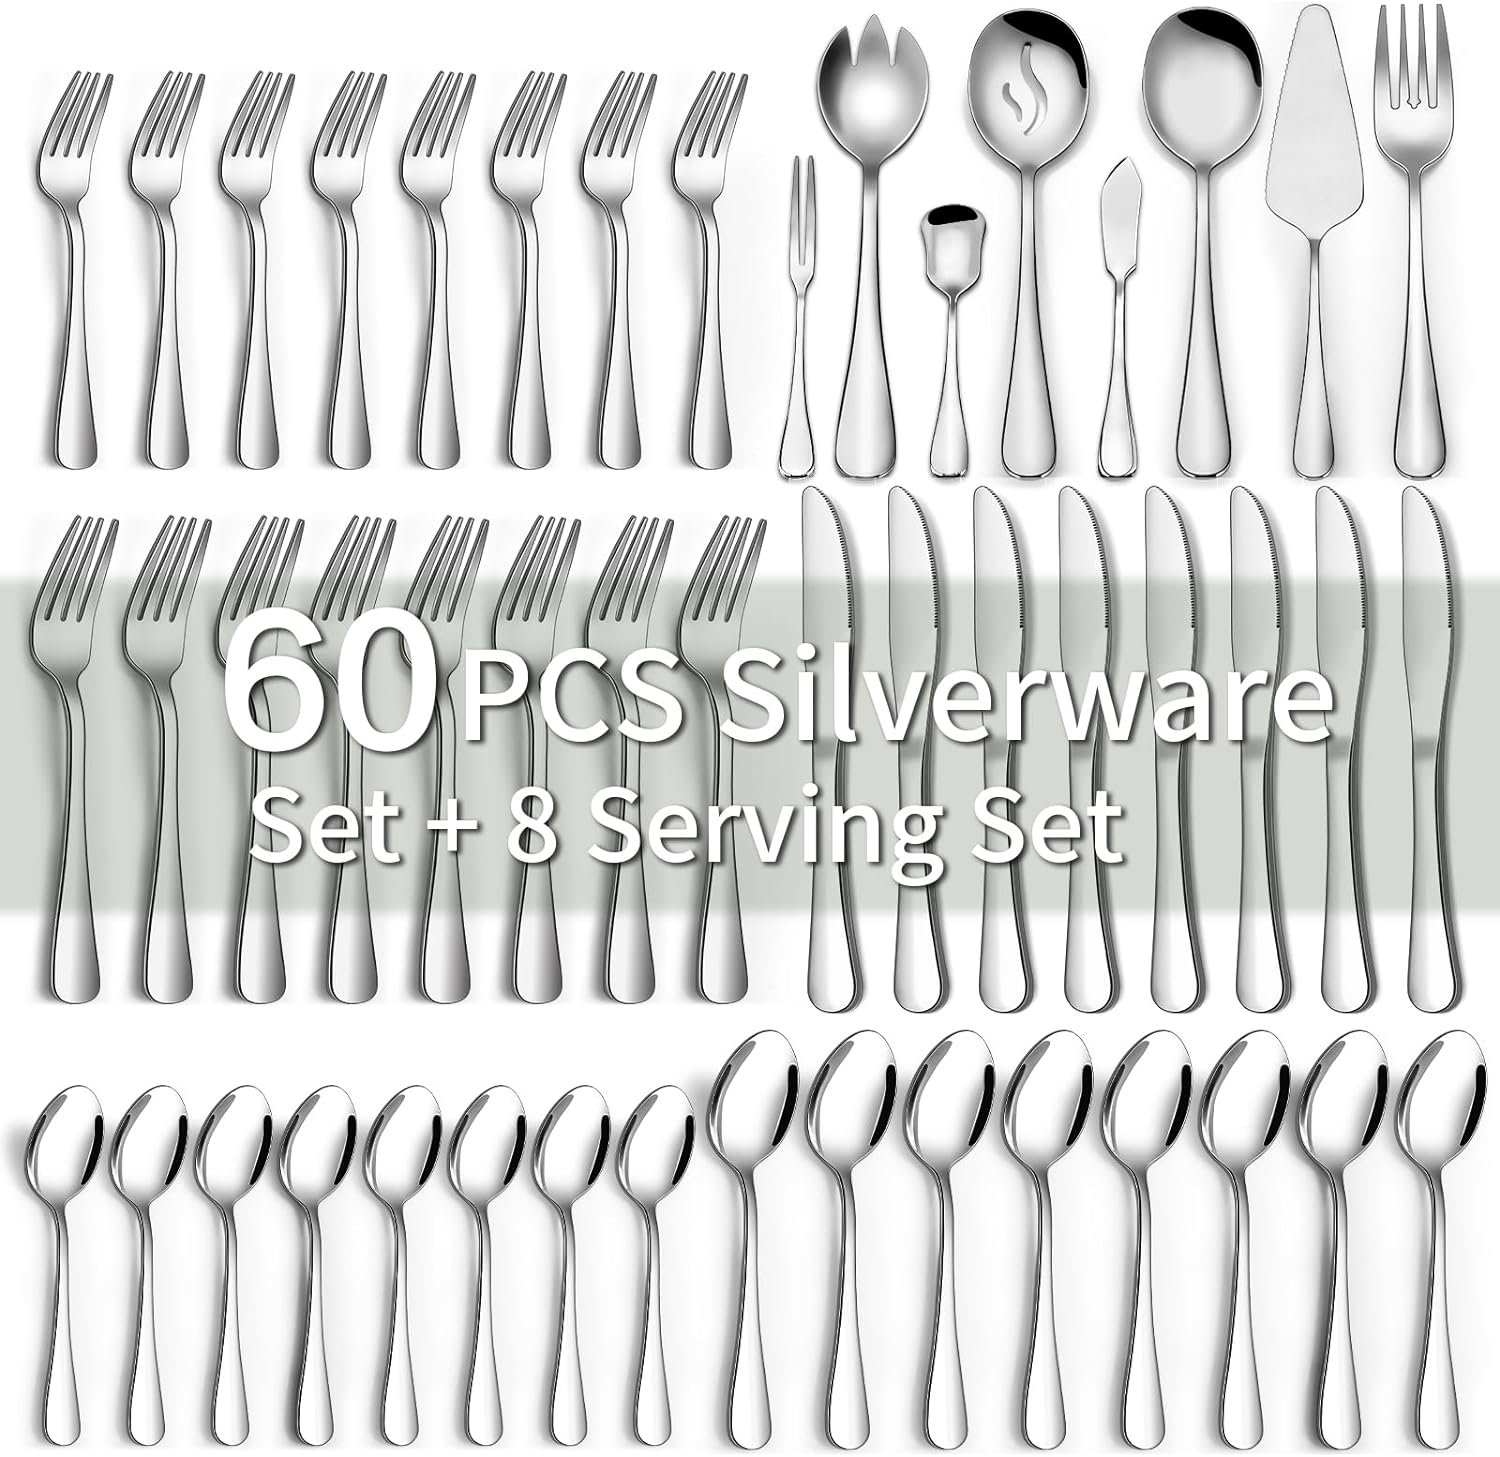 68 Pieces Silverware Set with Serving Utensils Set, CEKEE Stainless Steel Flatware Set for 12, Heavy Duty Cutlery Set, Kitchen Utensil Sets for Home Restaurant, Mirror Finish, Dishwasher Safe